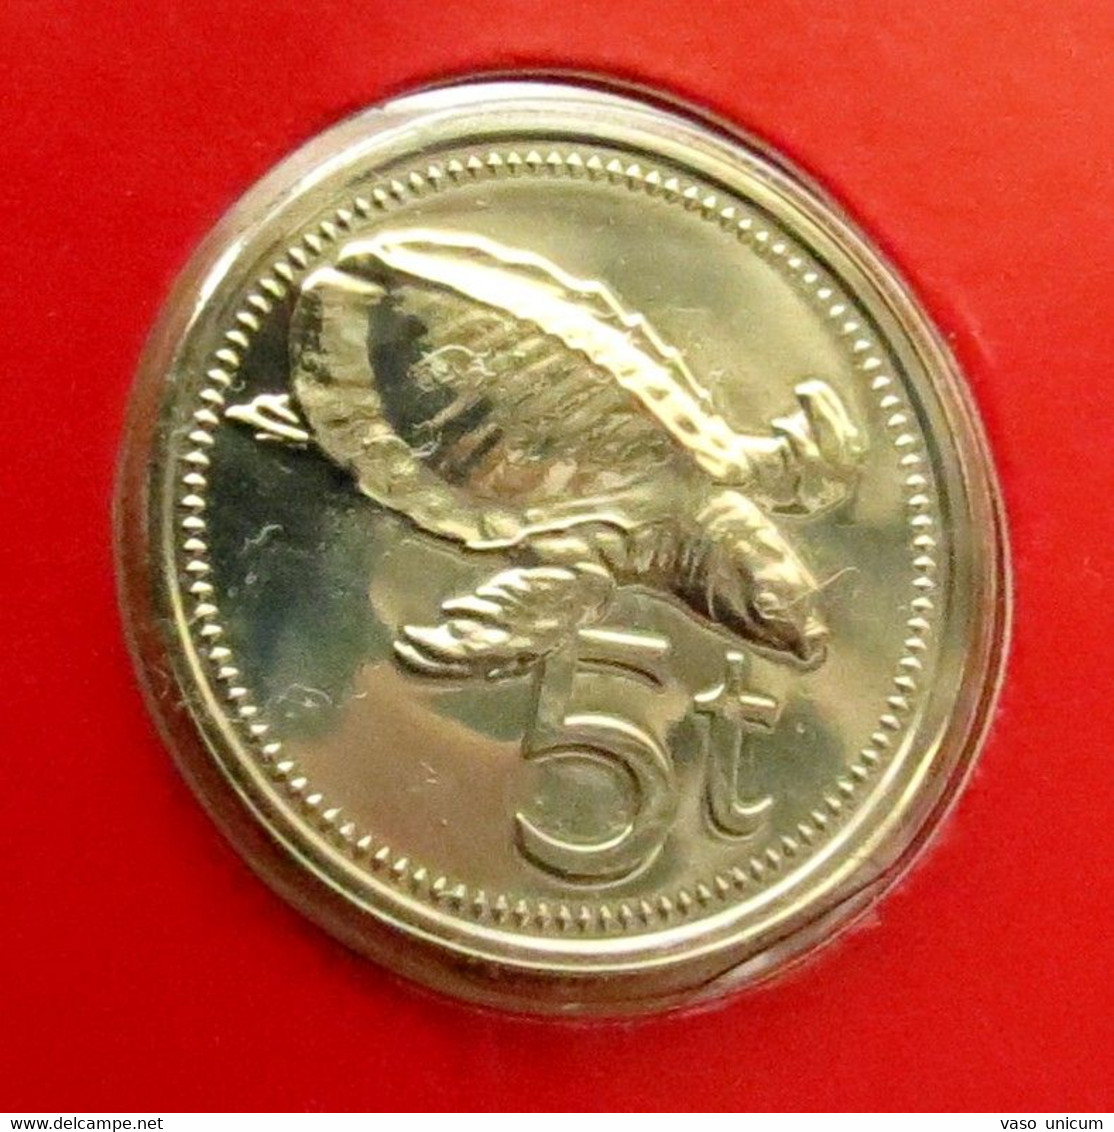 Papua New Guinea 5 Toea 1977 UNC - Minted 603 Coins Only - Papuasia Nuova Guinea